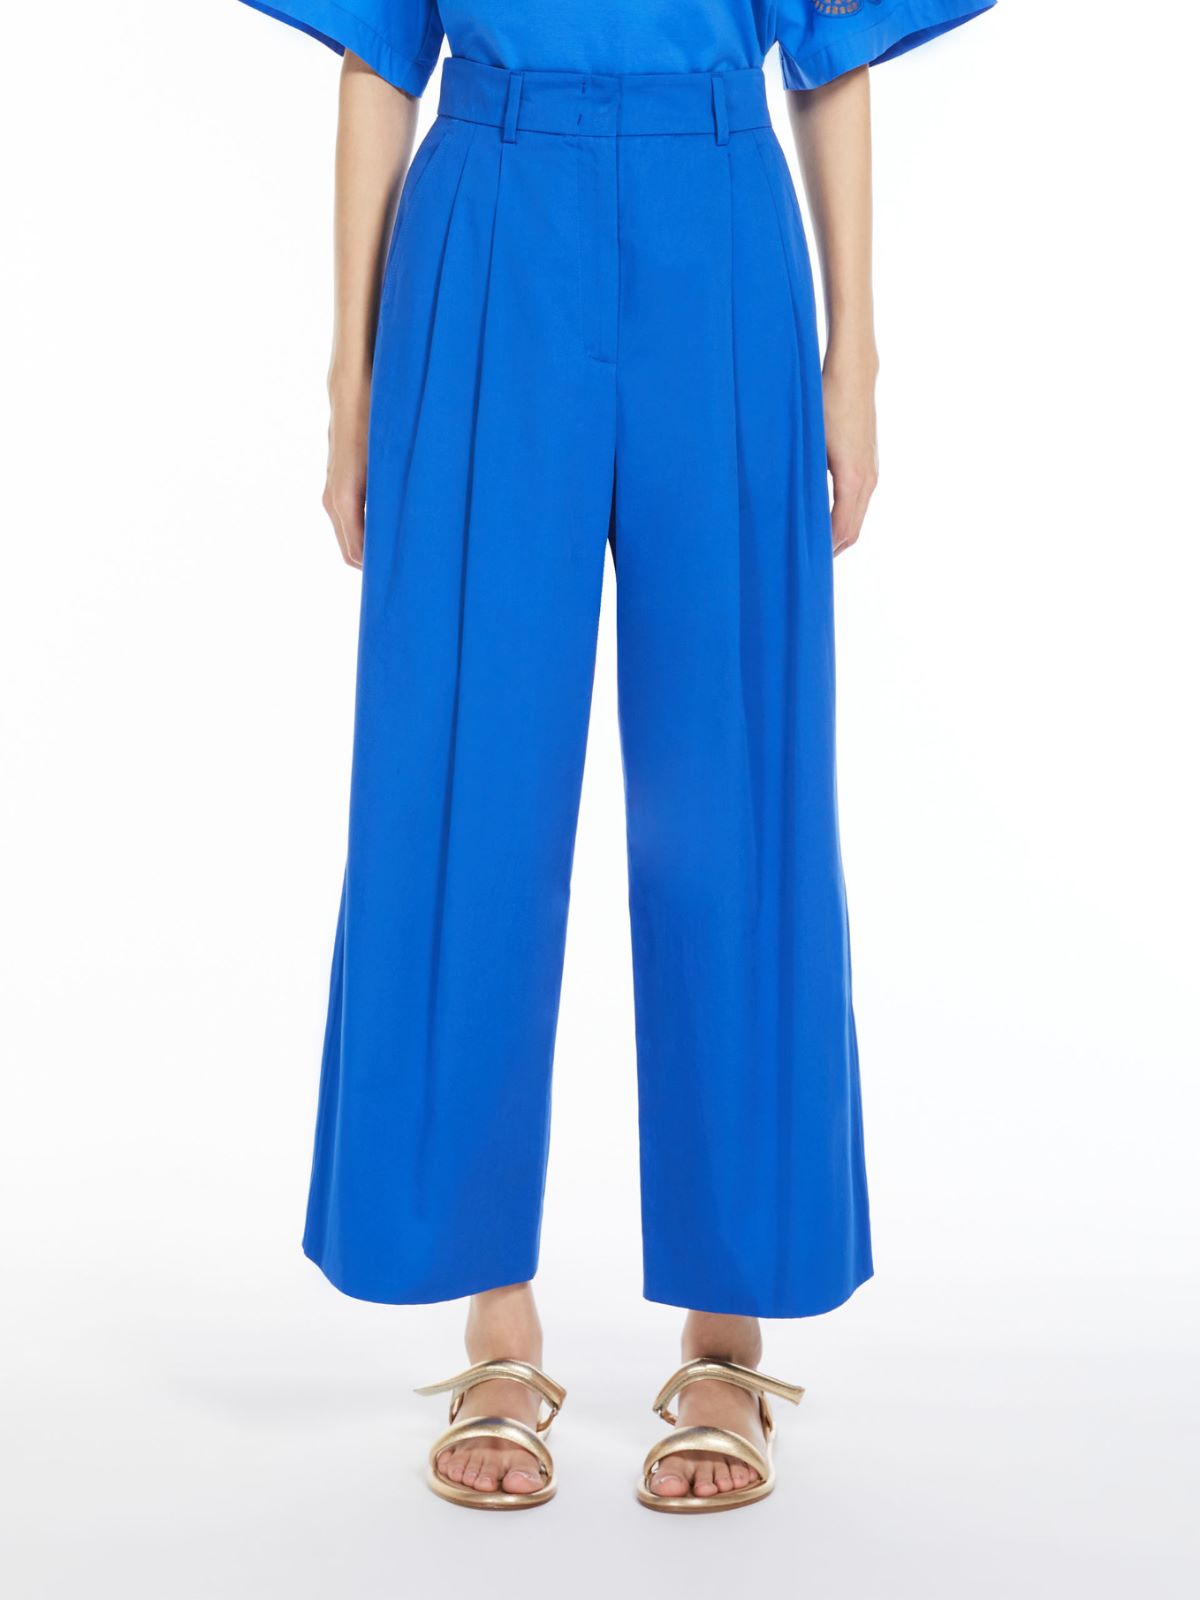 Trousers in cotton satin - CORNFLOWER BLUE - Weekend Max Mara - 2